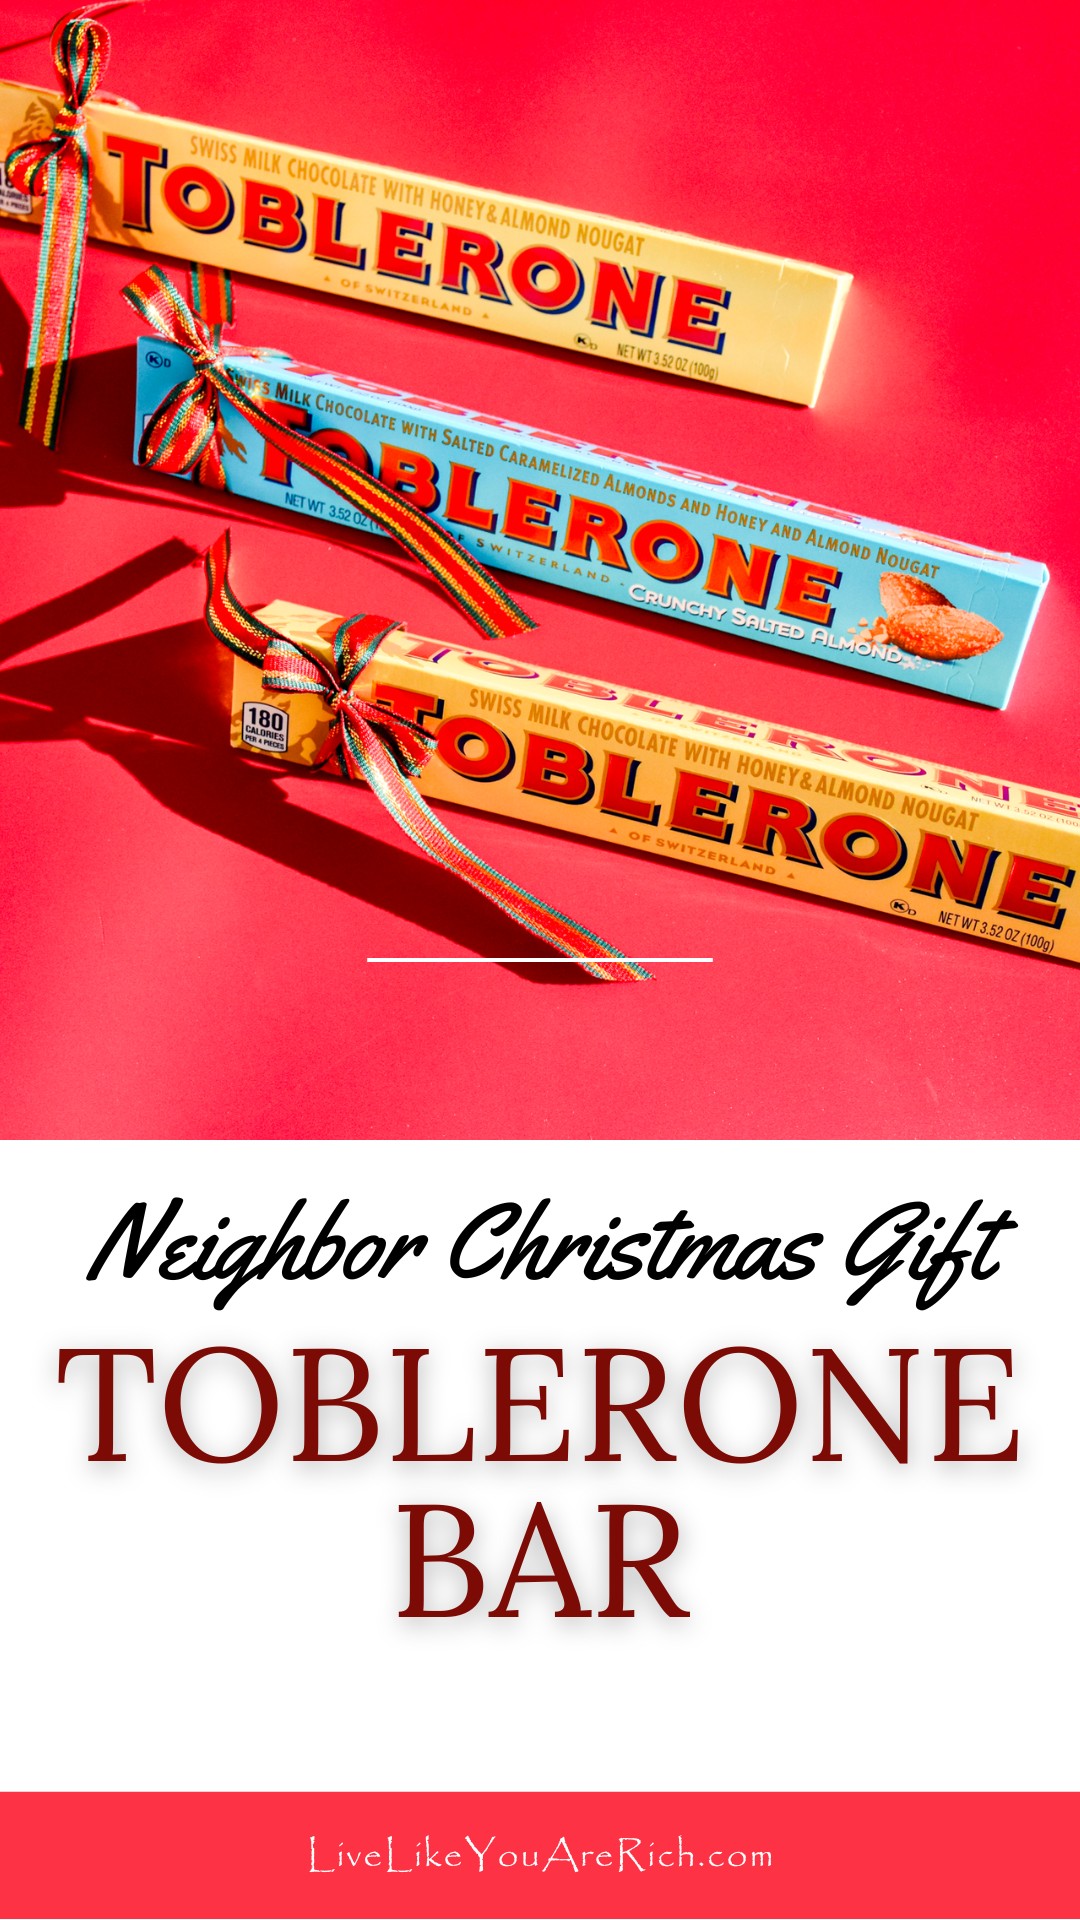 Neighbor Christmas Gift: Toblerone Bar